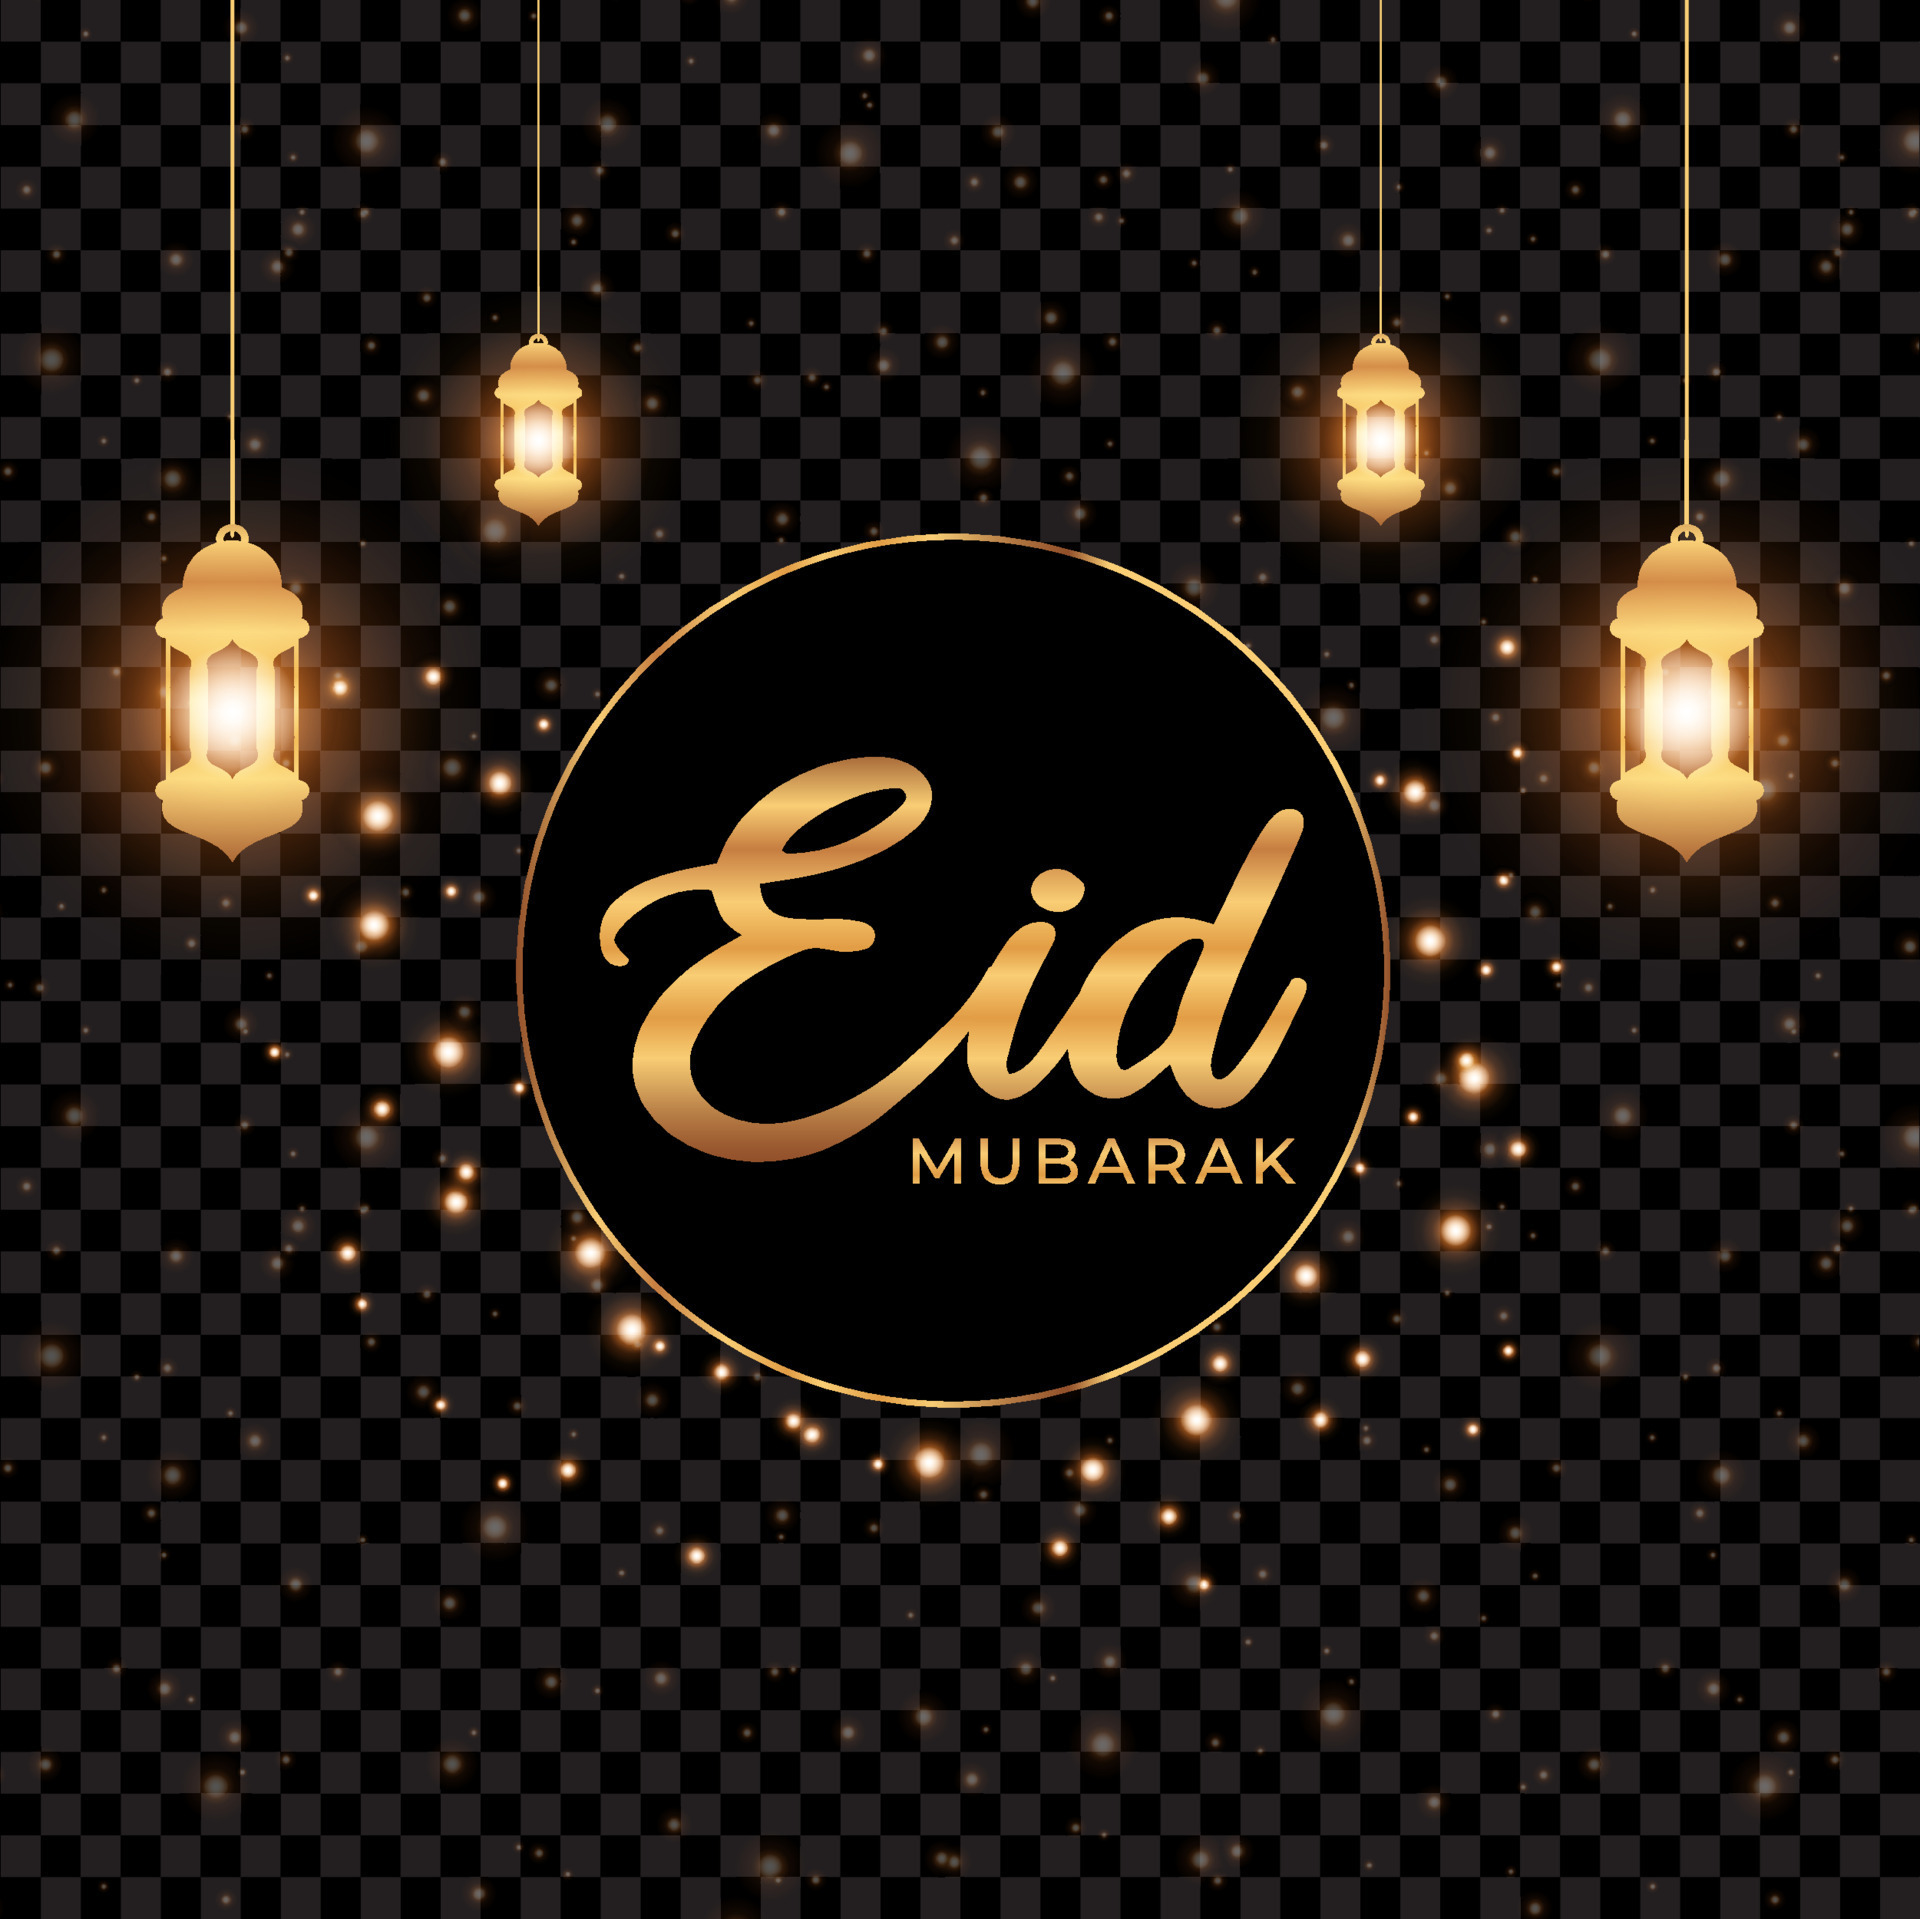 Eid mubarak greeting card. Golden lanterns and stars on black background.  Vector illustration 7498649 Vector Art at Vecteezy